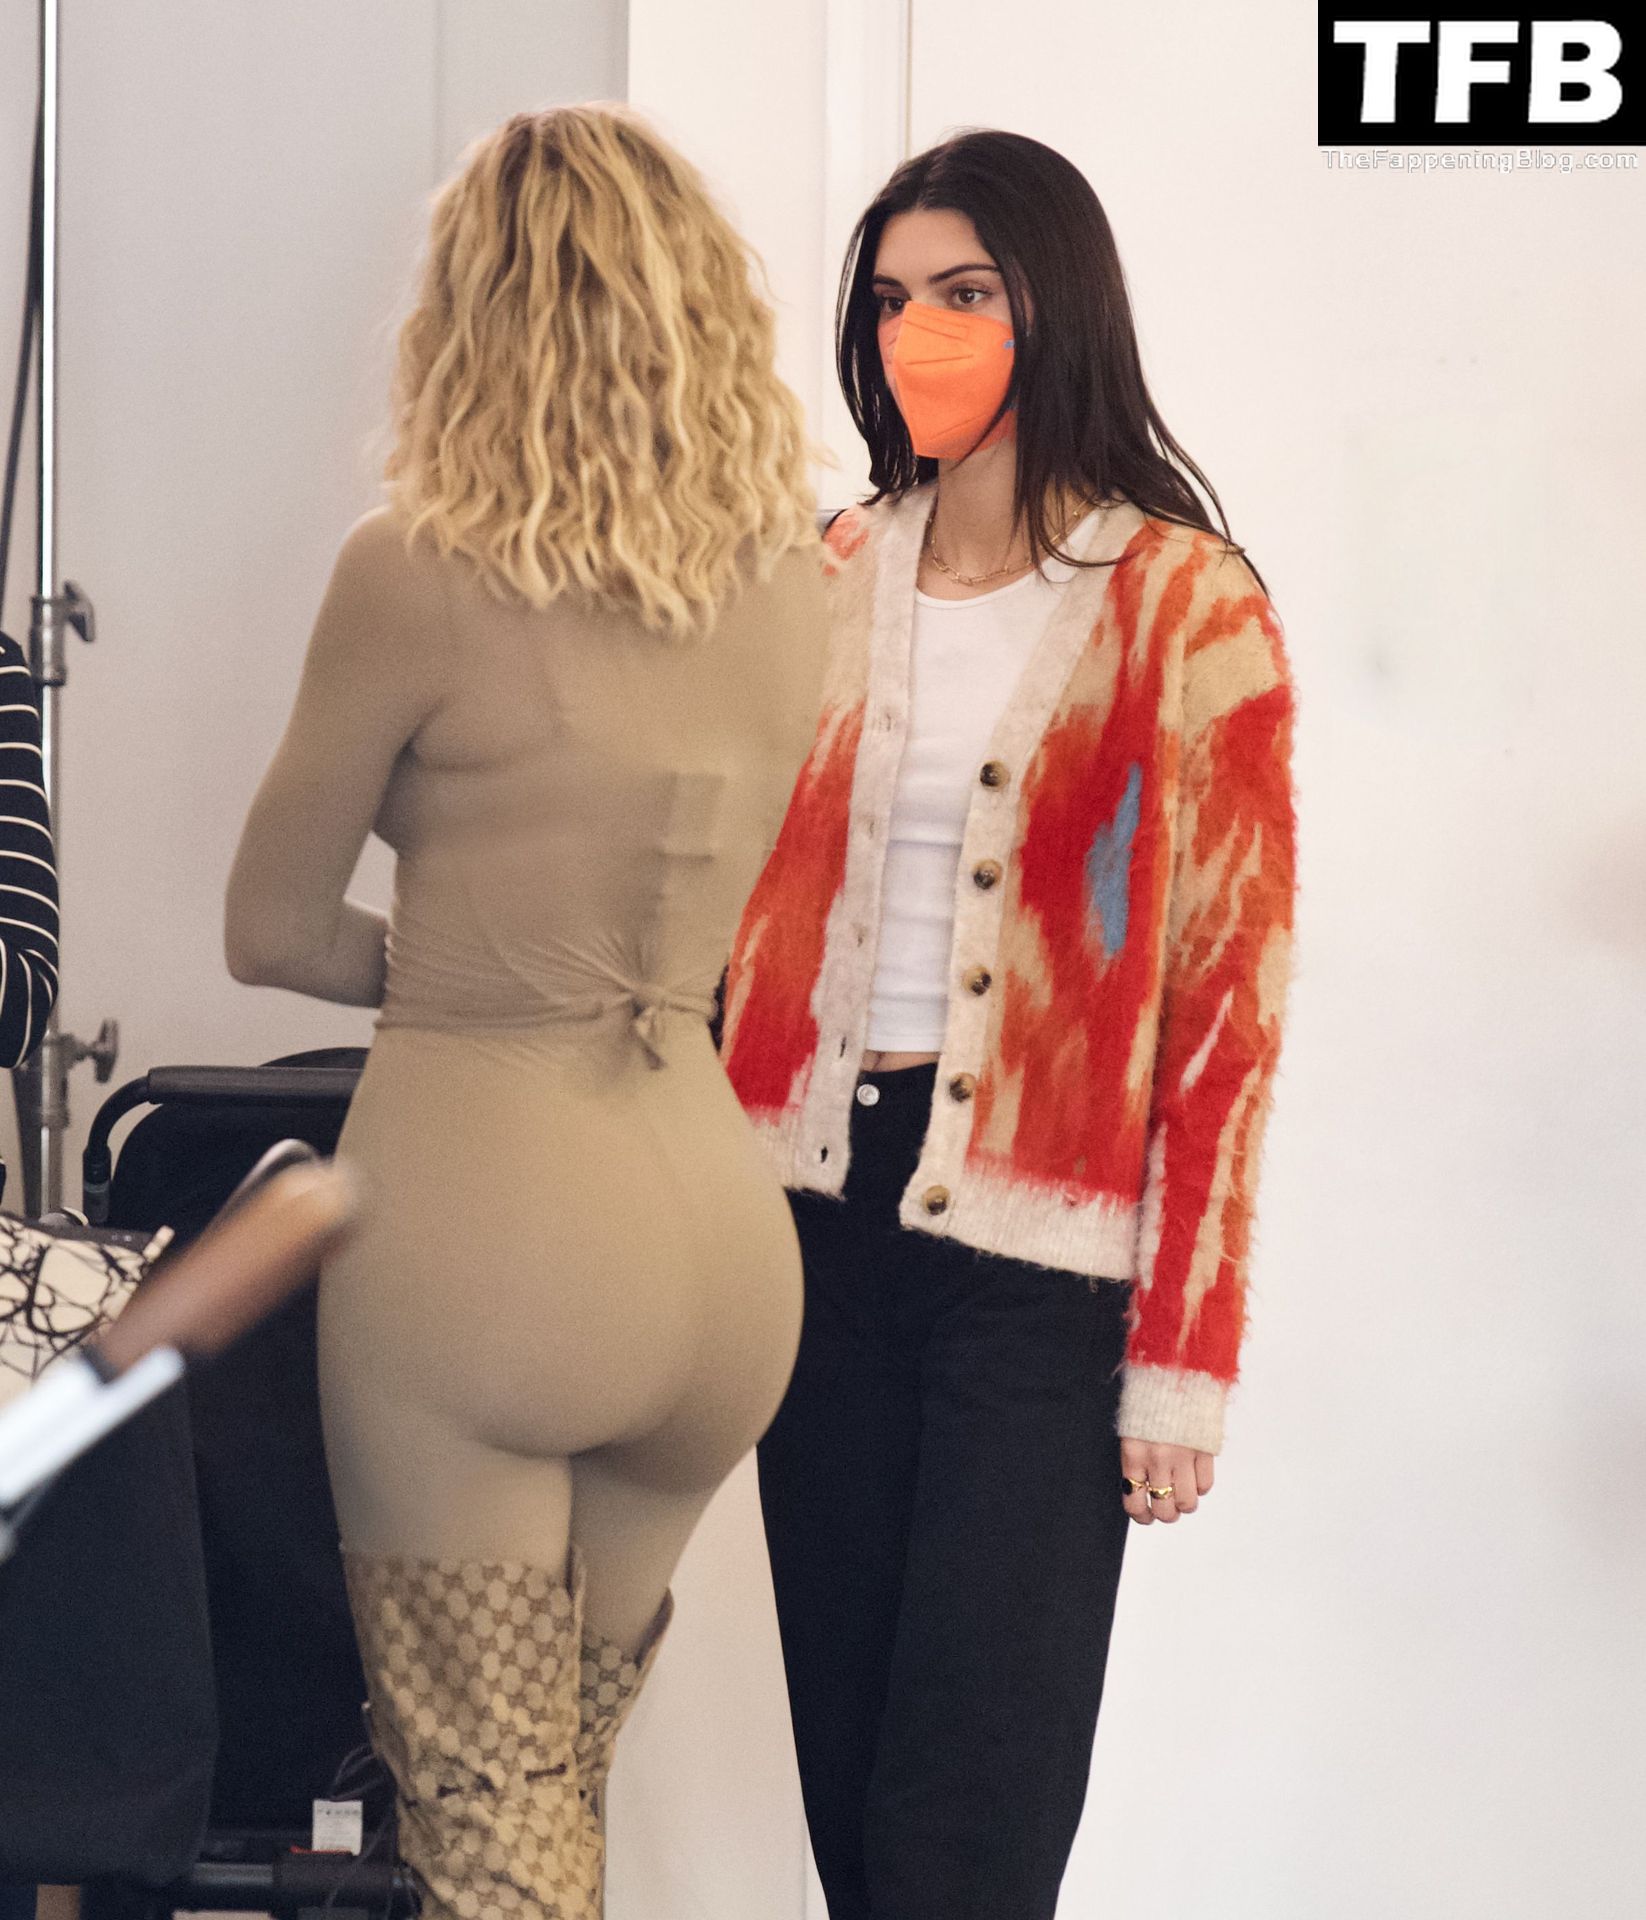 Khloe-Kardashian-Sexy-Butts-The-Fappening-Blog-13.jpg